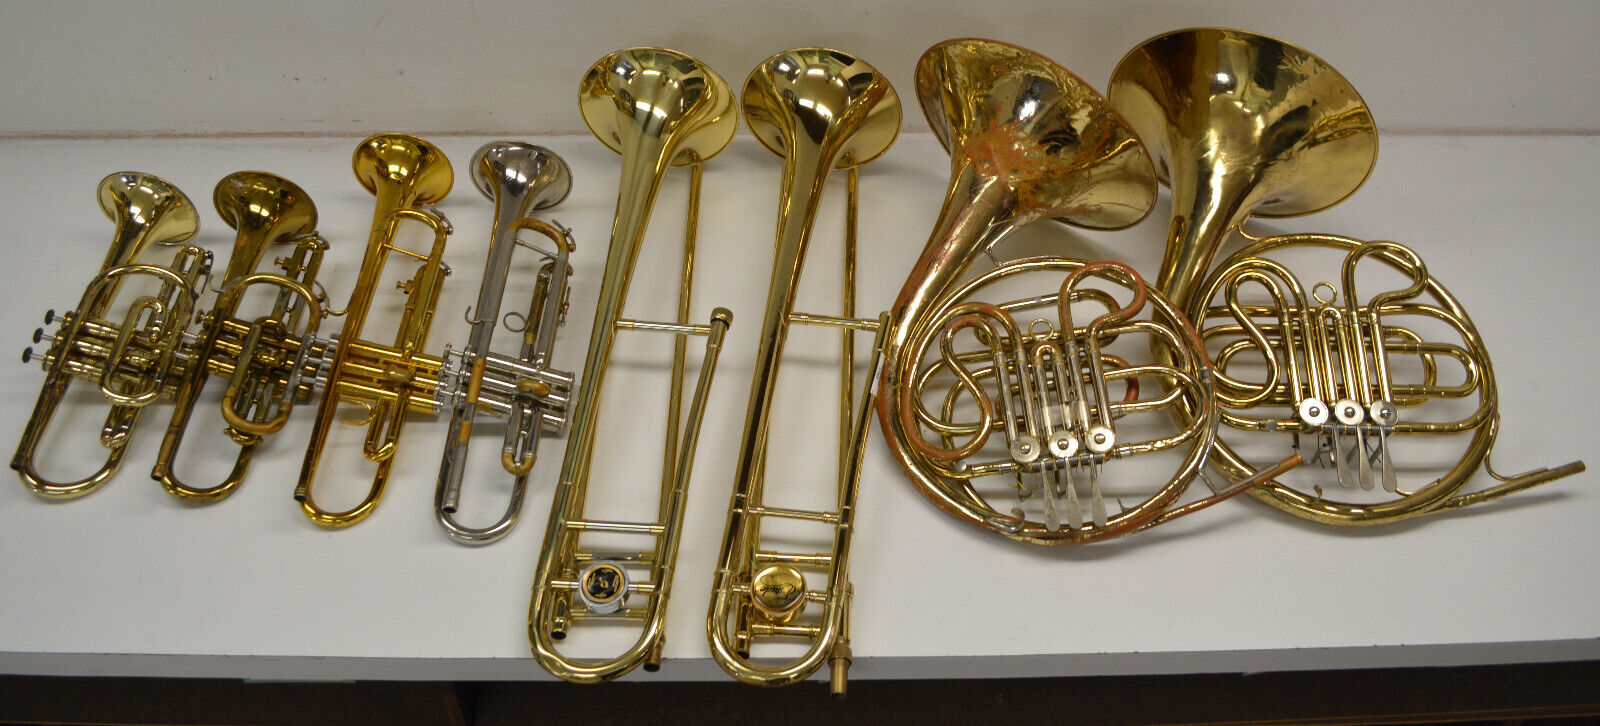 Set/lot 2 French Horns, 2 Trumpets, 2 Tenor Trombones, 2 Cornets (conn, Holton)